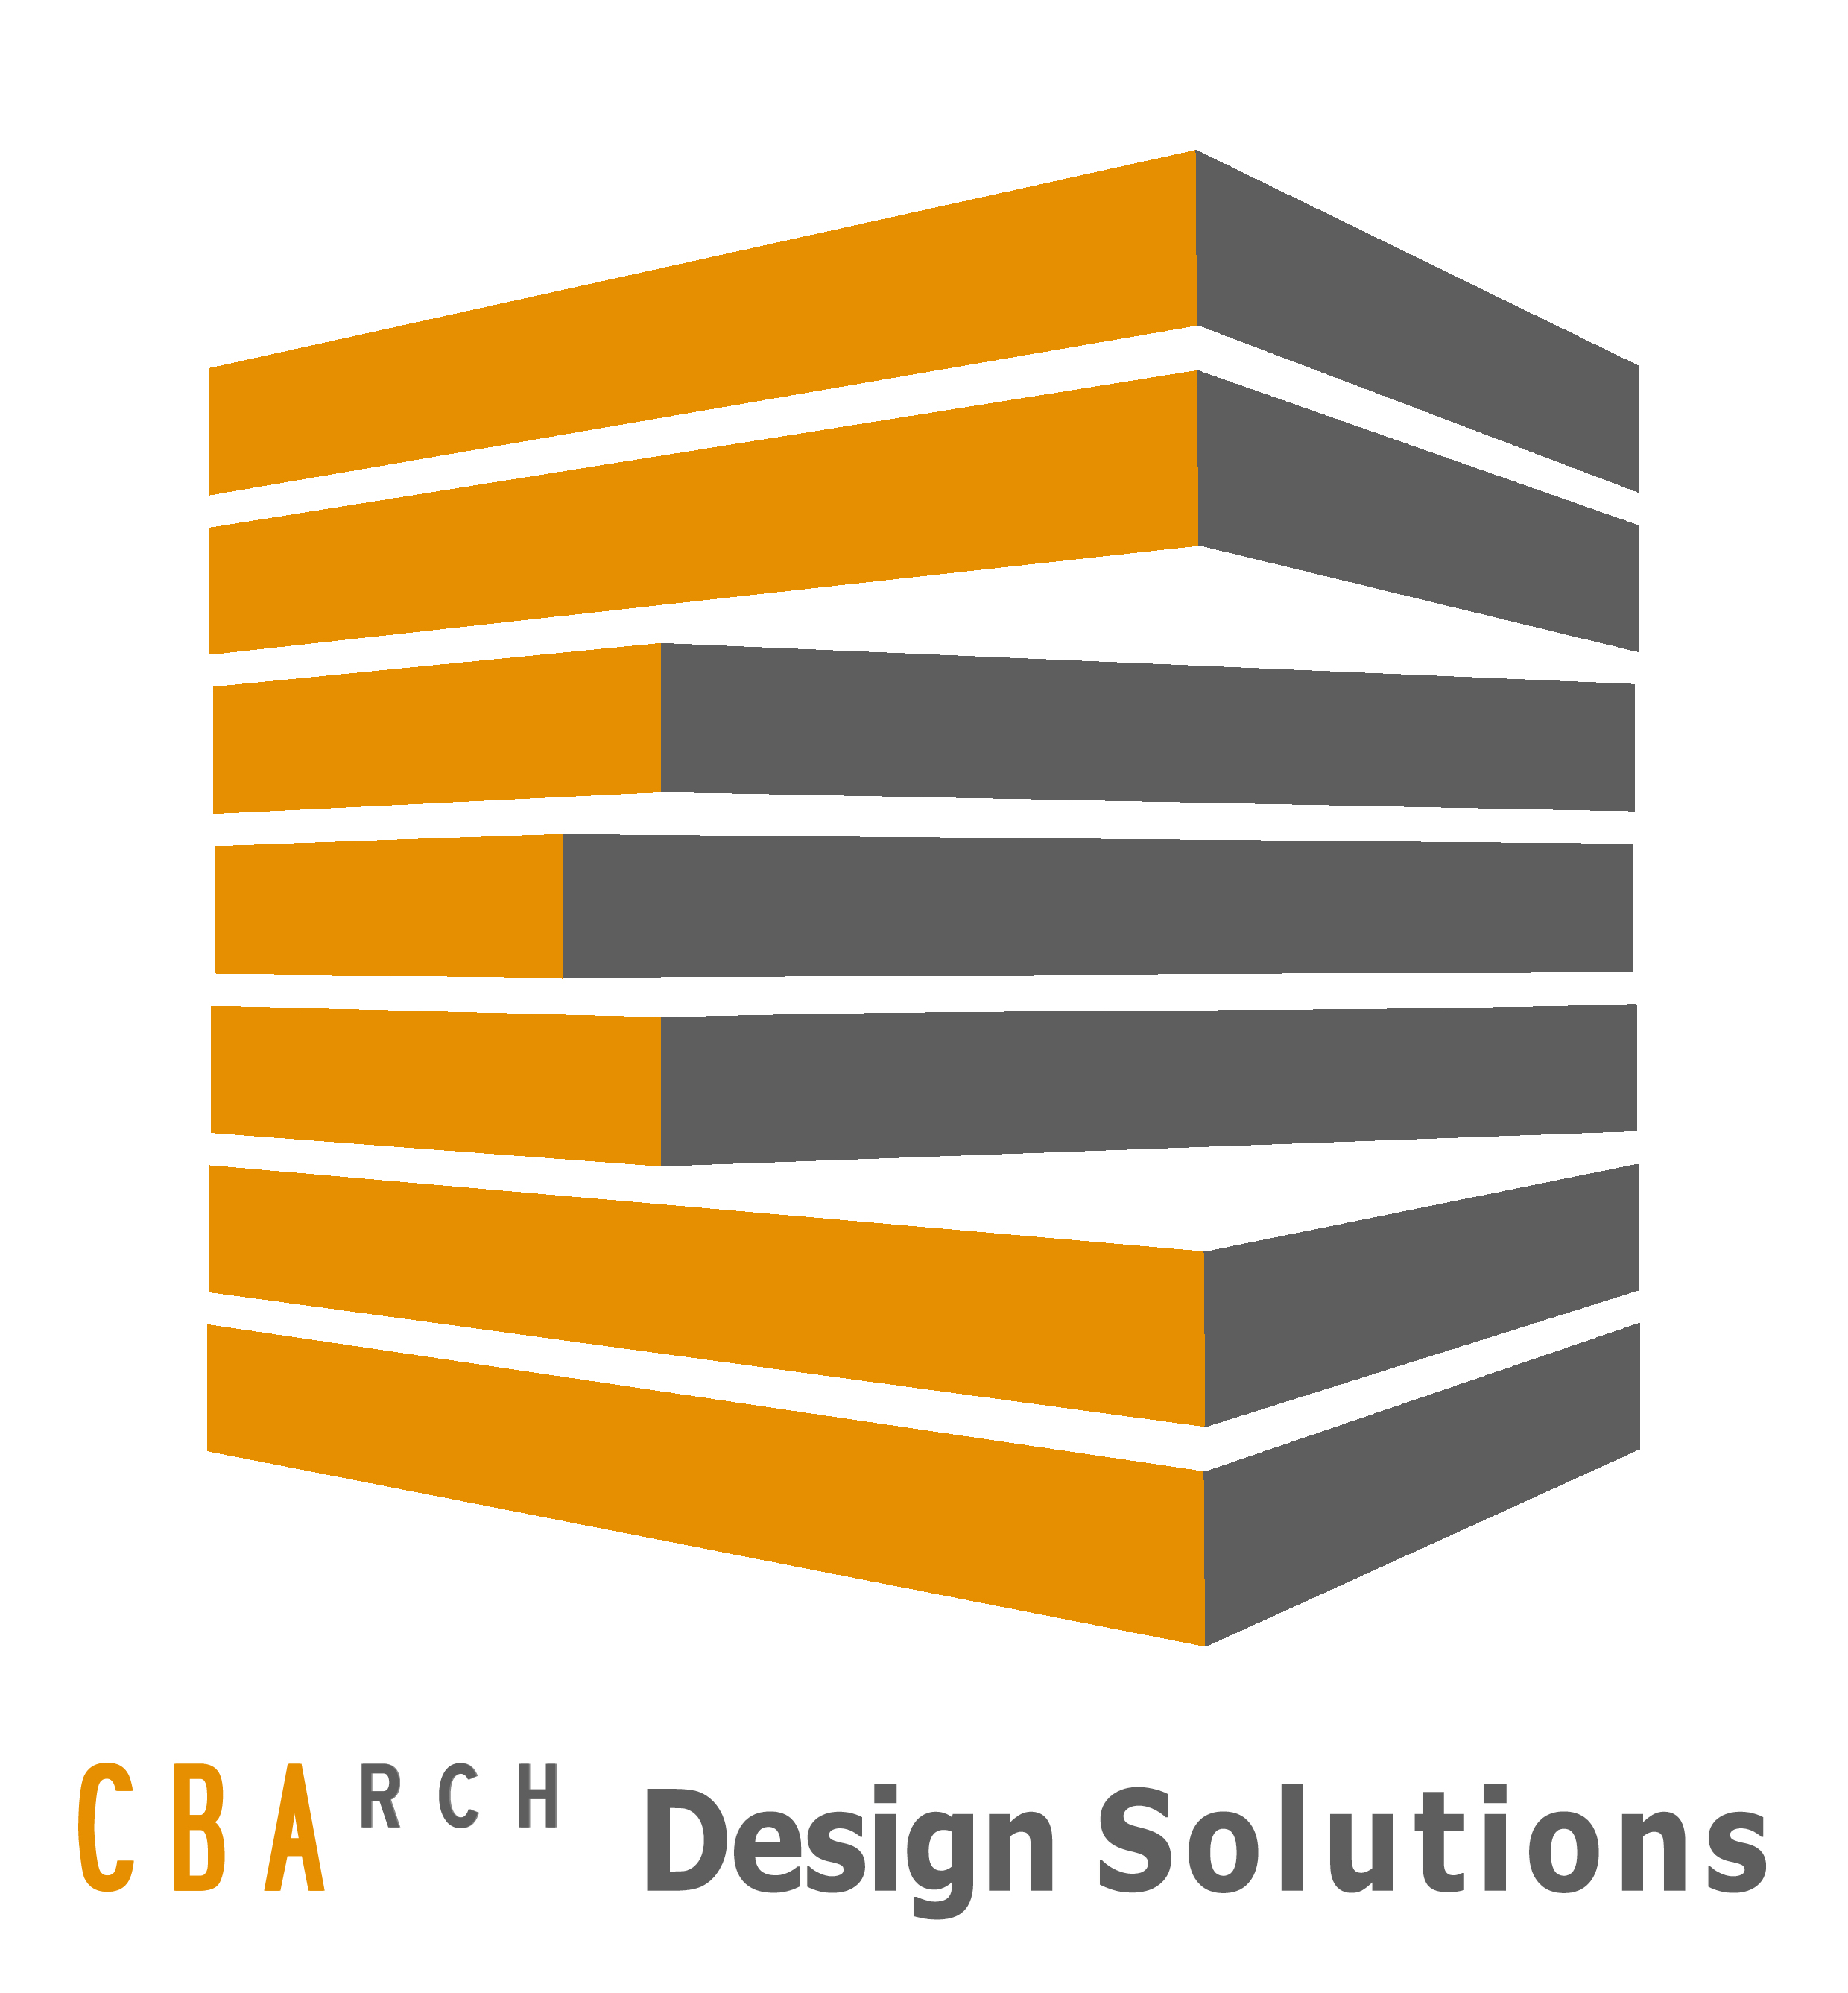 CB.Arch Design Solutions